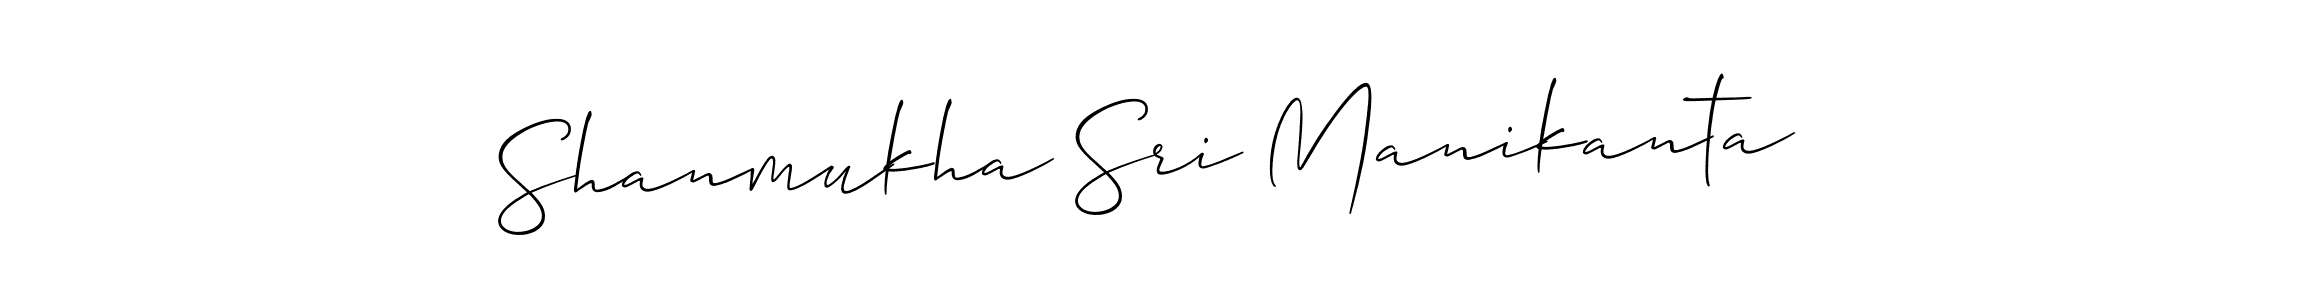 How to Draw Shanmukha Sri Manikanta signature style? Allison_Script is a latest design signature styles for name Shanmukha Sri Manikanta. Shanmukha Sri Manikanta signature style 2 images and pictures png